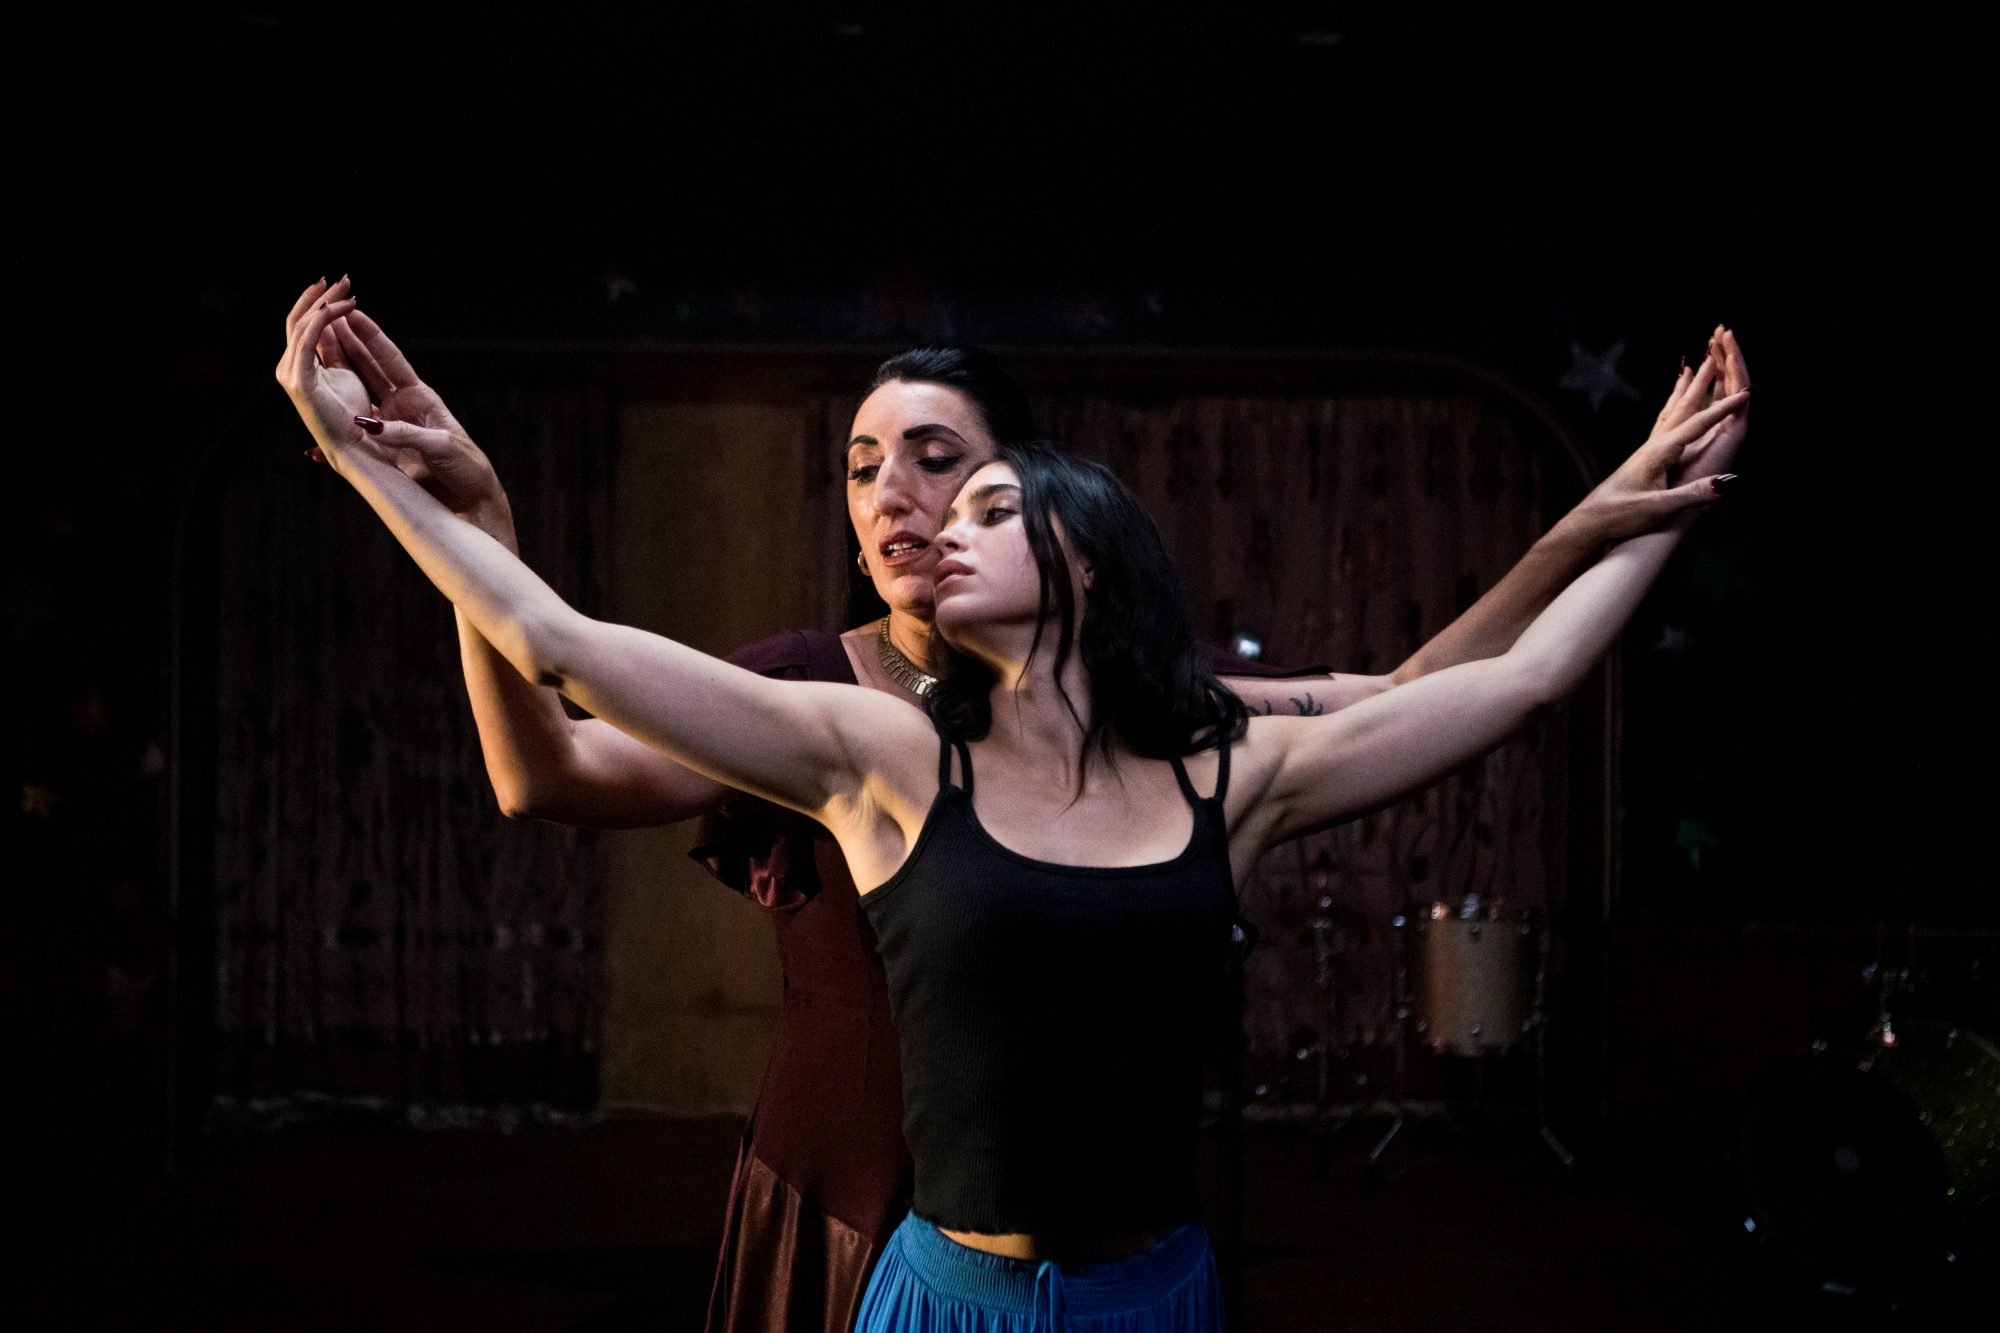 'Carmen' Rossy de Palma as Masilda and Melissa Barrera as Carmen. Masilda is standing behind Carmen, with both of their arms raised. 